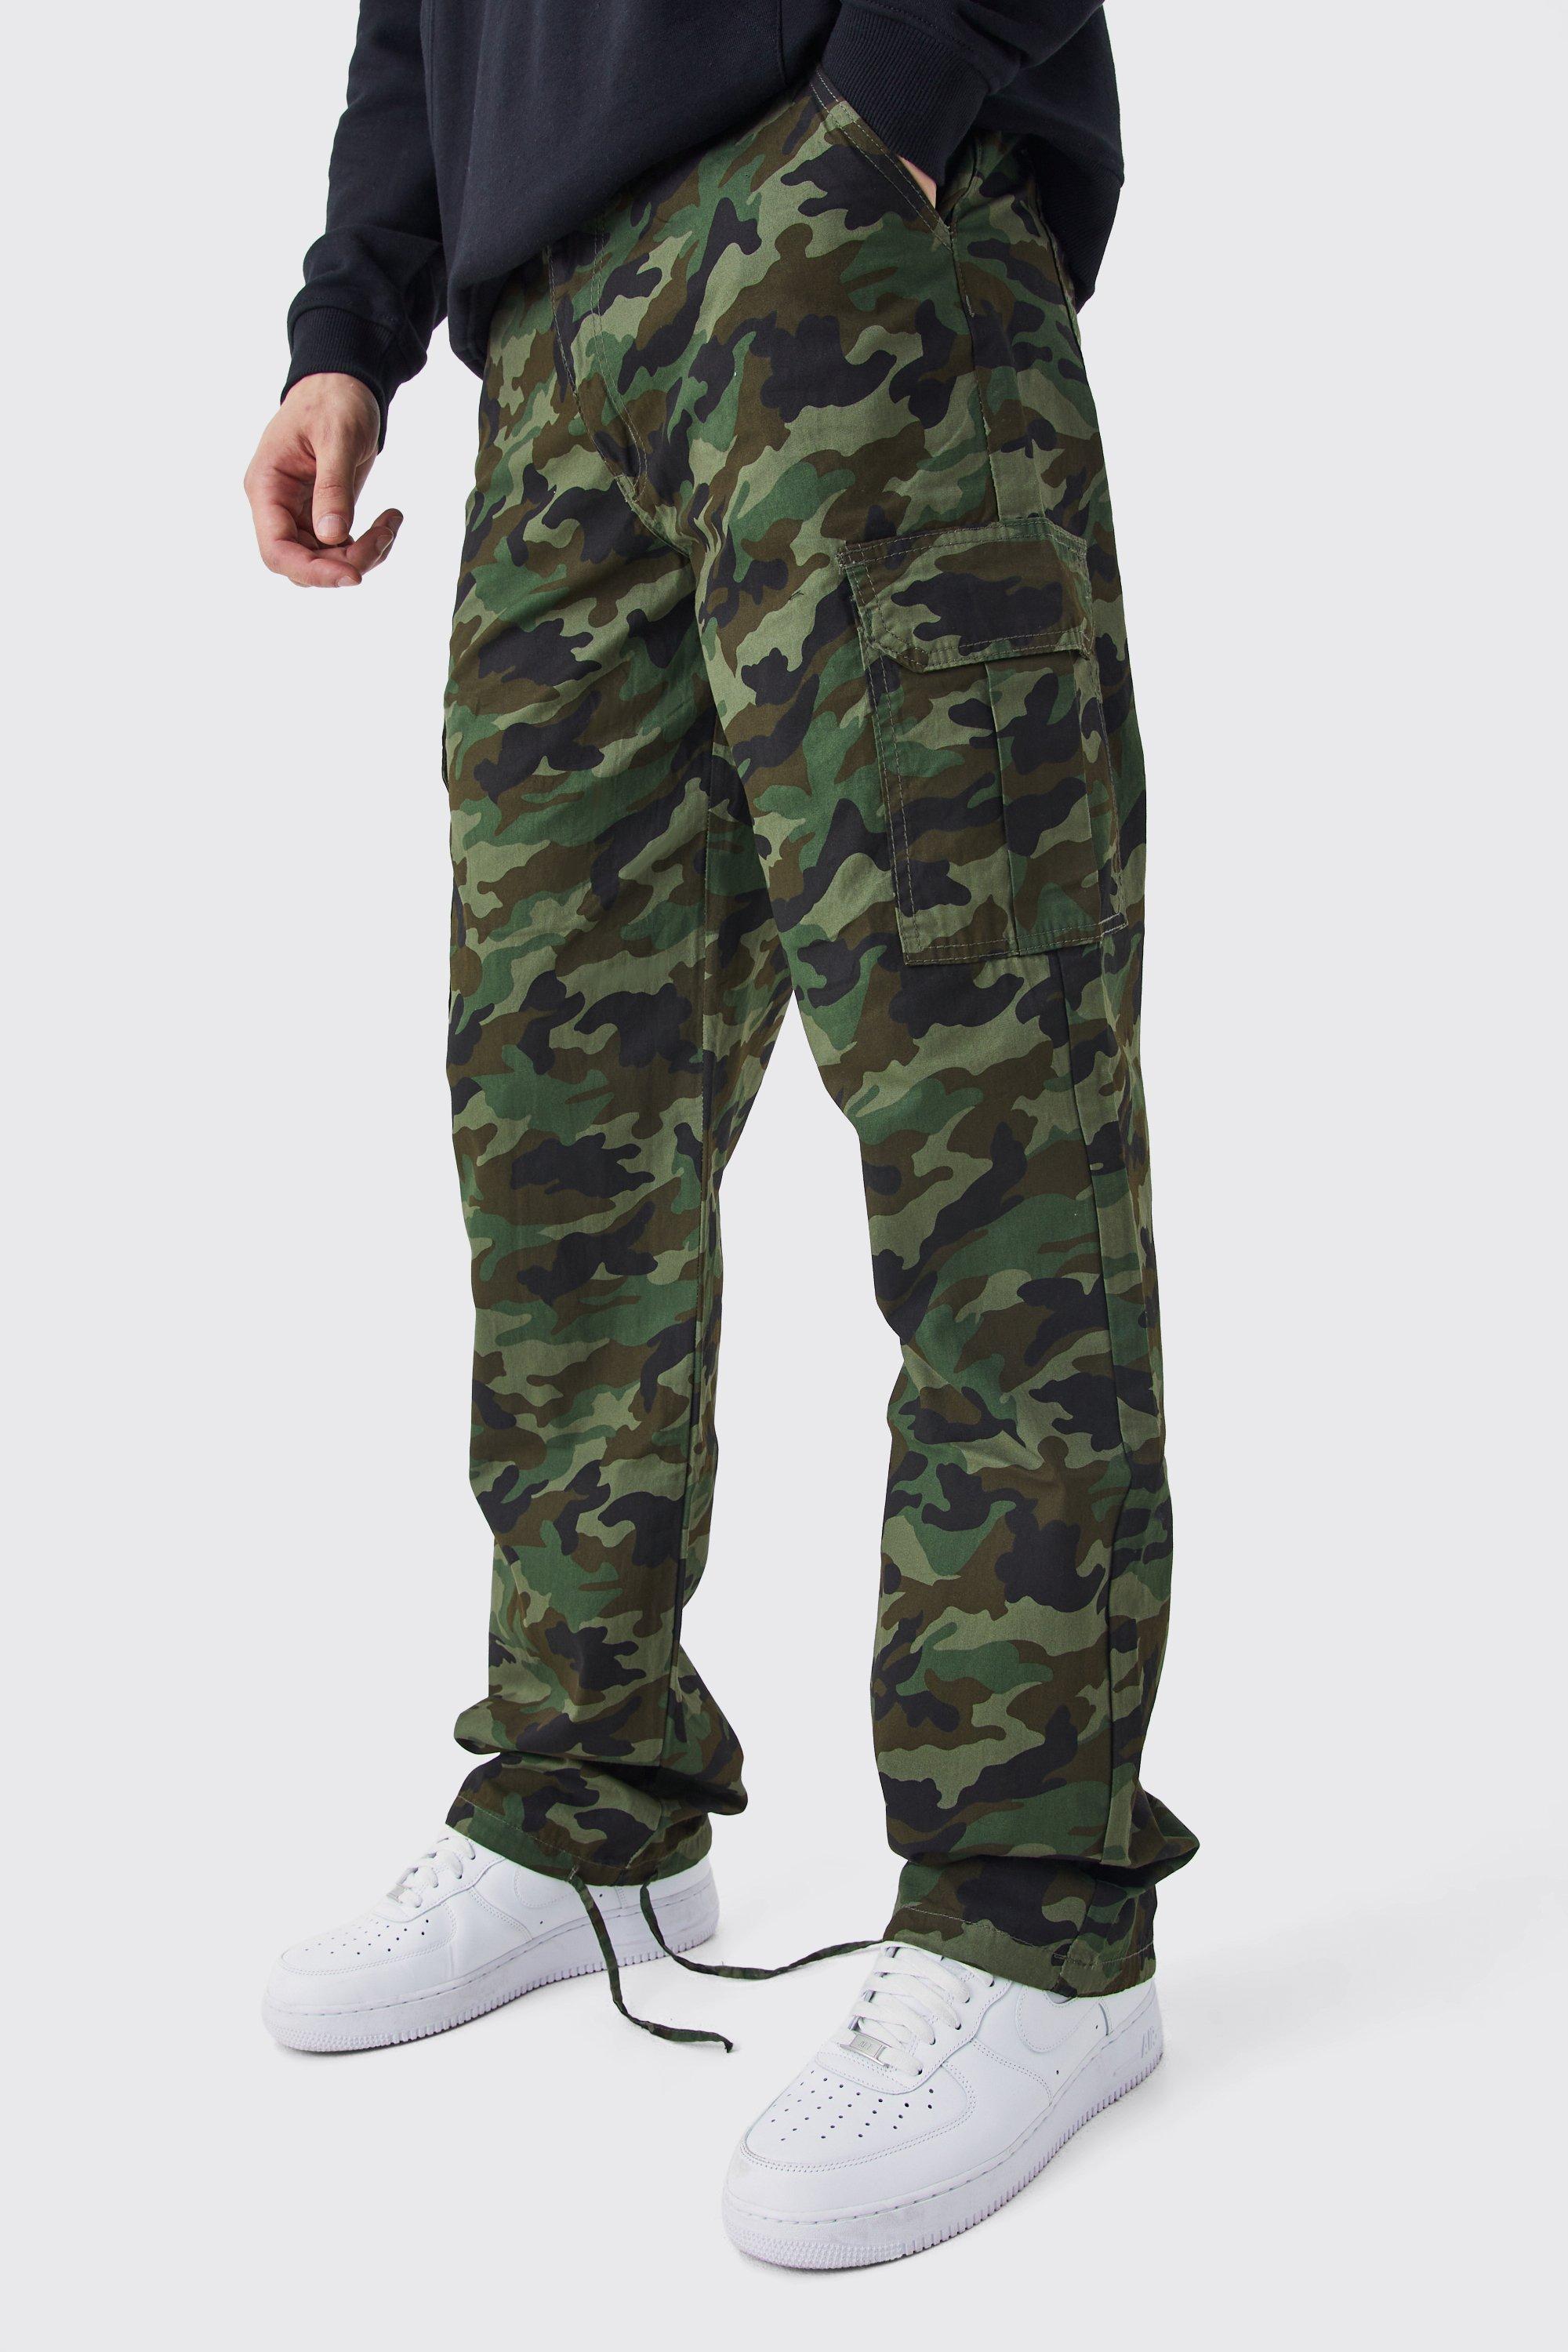 tall - pantalon cargo ample à imprimé camouflage homme - kaki - 34, kaki